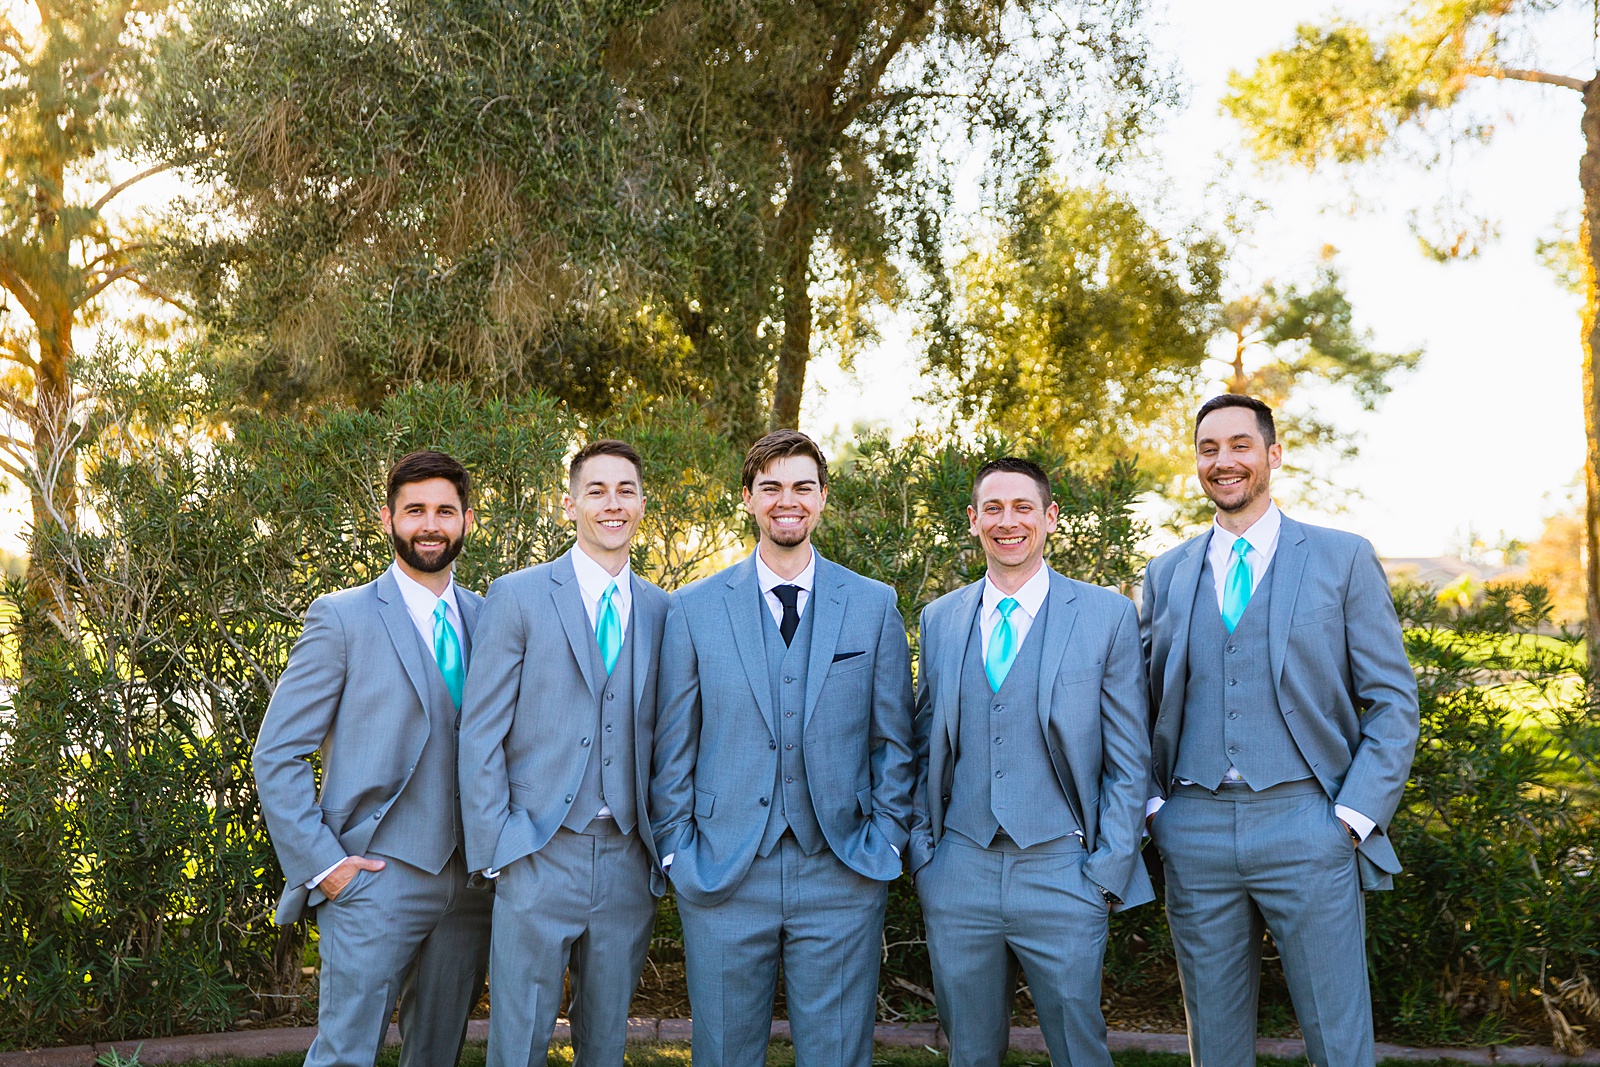 Groom and groomsmen together at a Ocotillo Oasis wedding by Arizona wedding photographer PMA Photography.